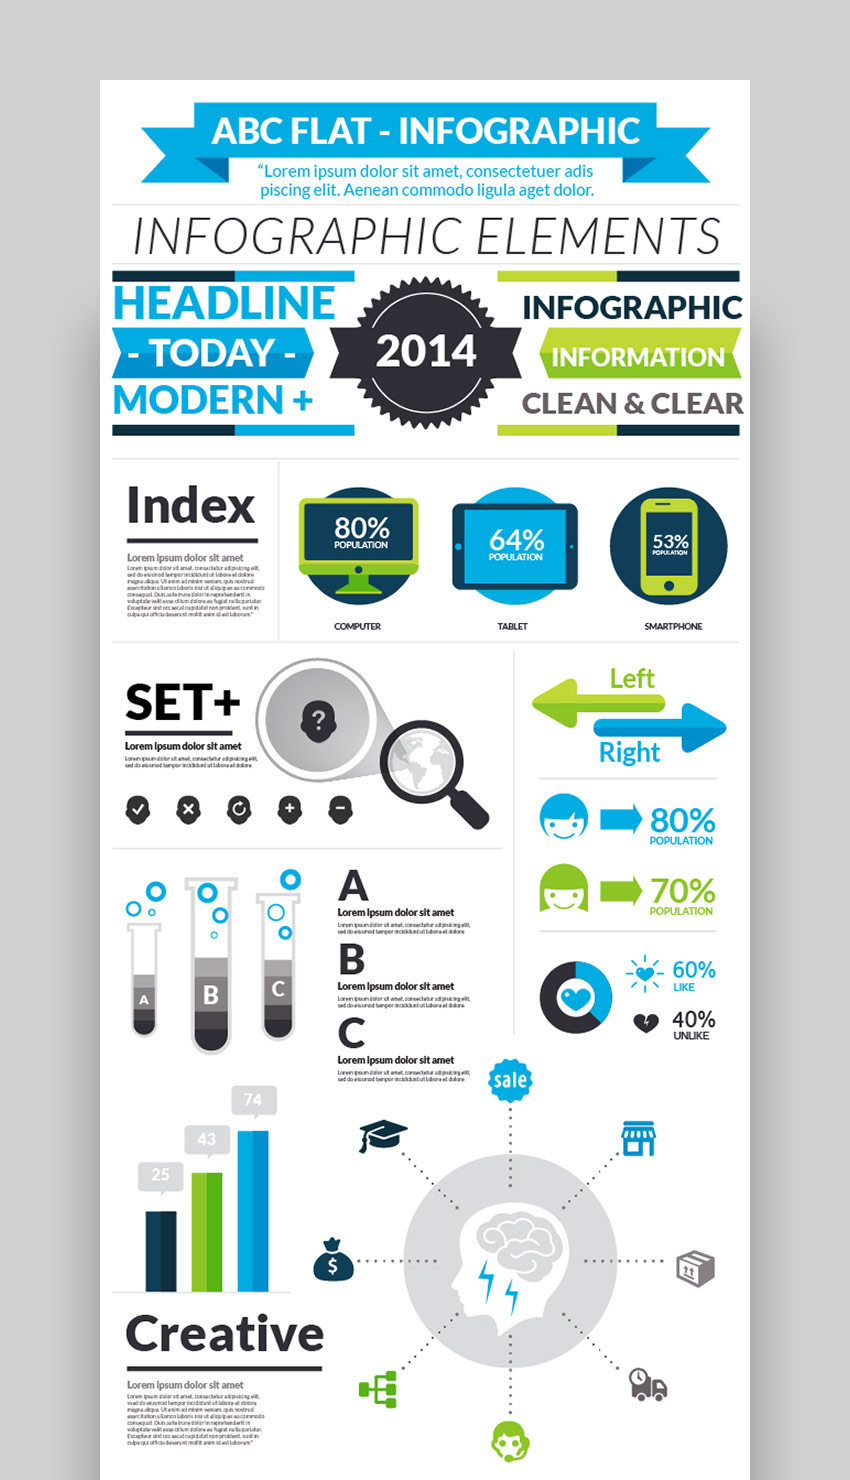 24+ Best infographic Design PowerPoint templates (With images) | Infographic design, Infographic ...